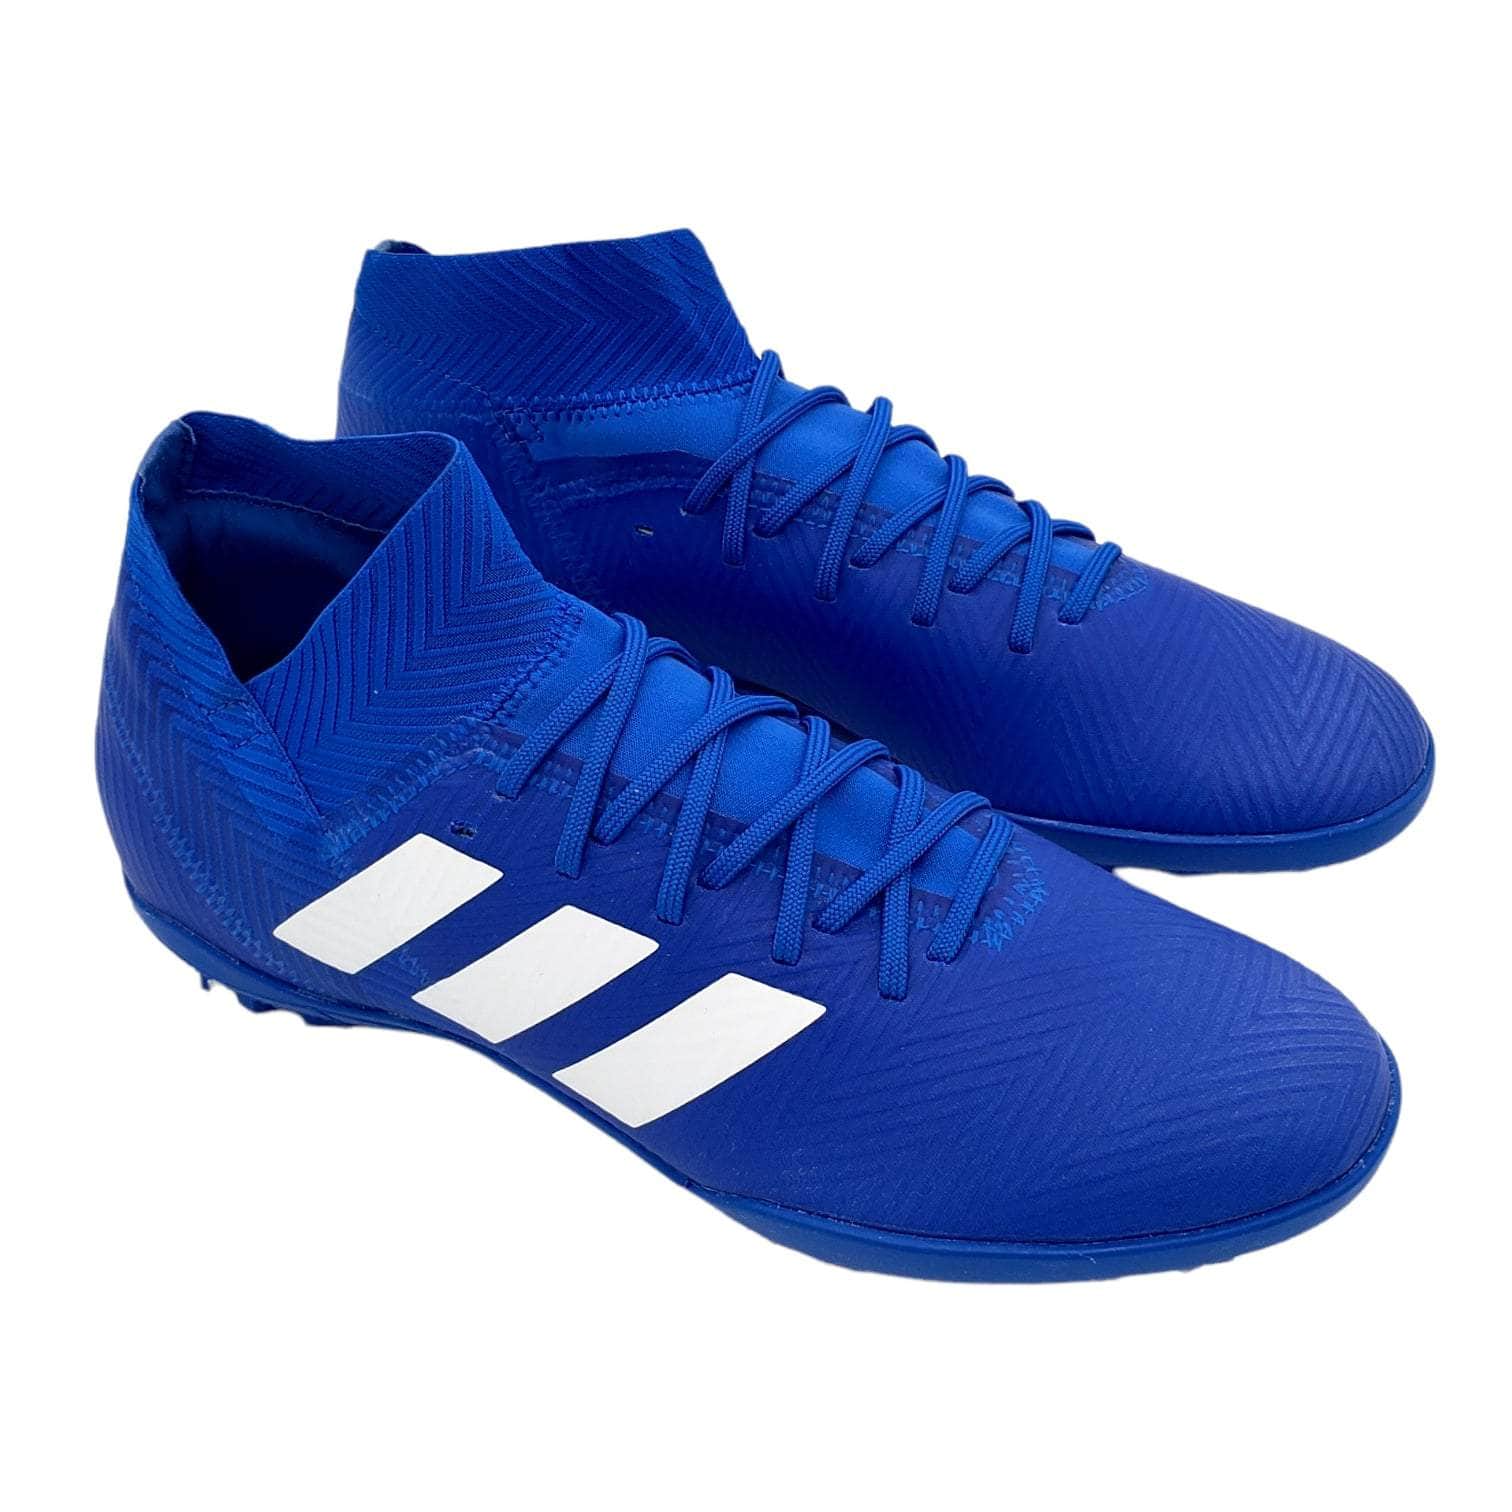 Adidas Nemeziz Turf Football Shoes from Crisis Online